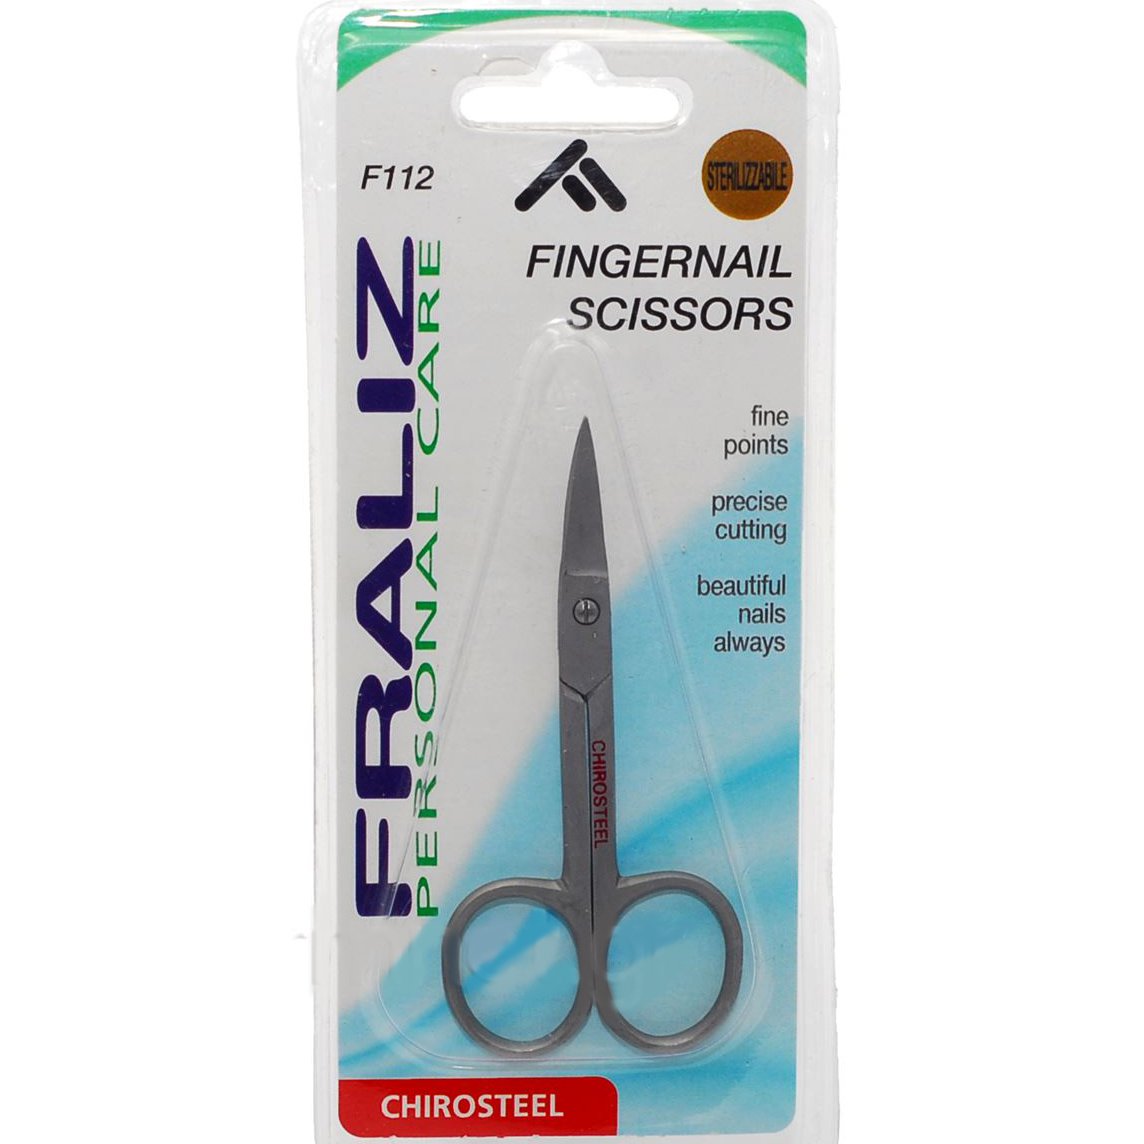 Fraliz F112 Fingernails Scissors Ψαλιδάκι για τα Νύχια των Χεριών Λεπτό Καμπυλωτό 1 Τεμάχιο